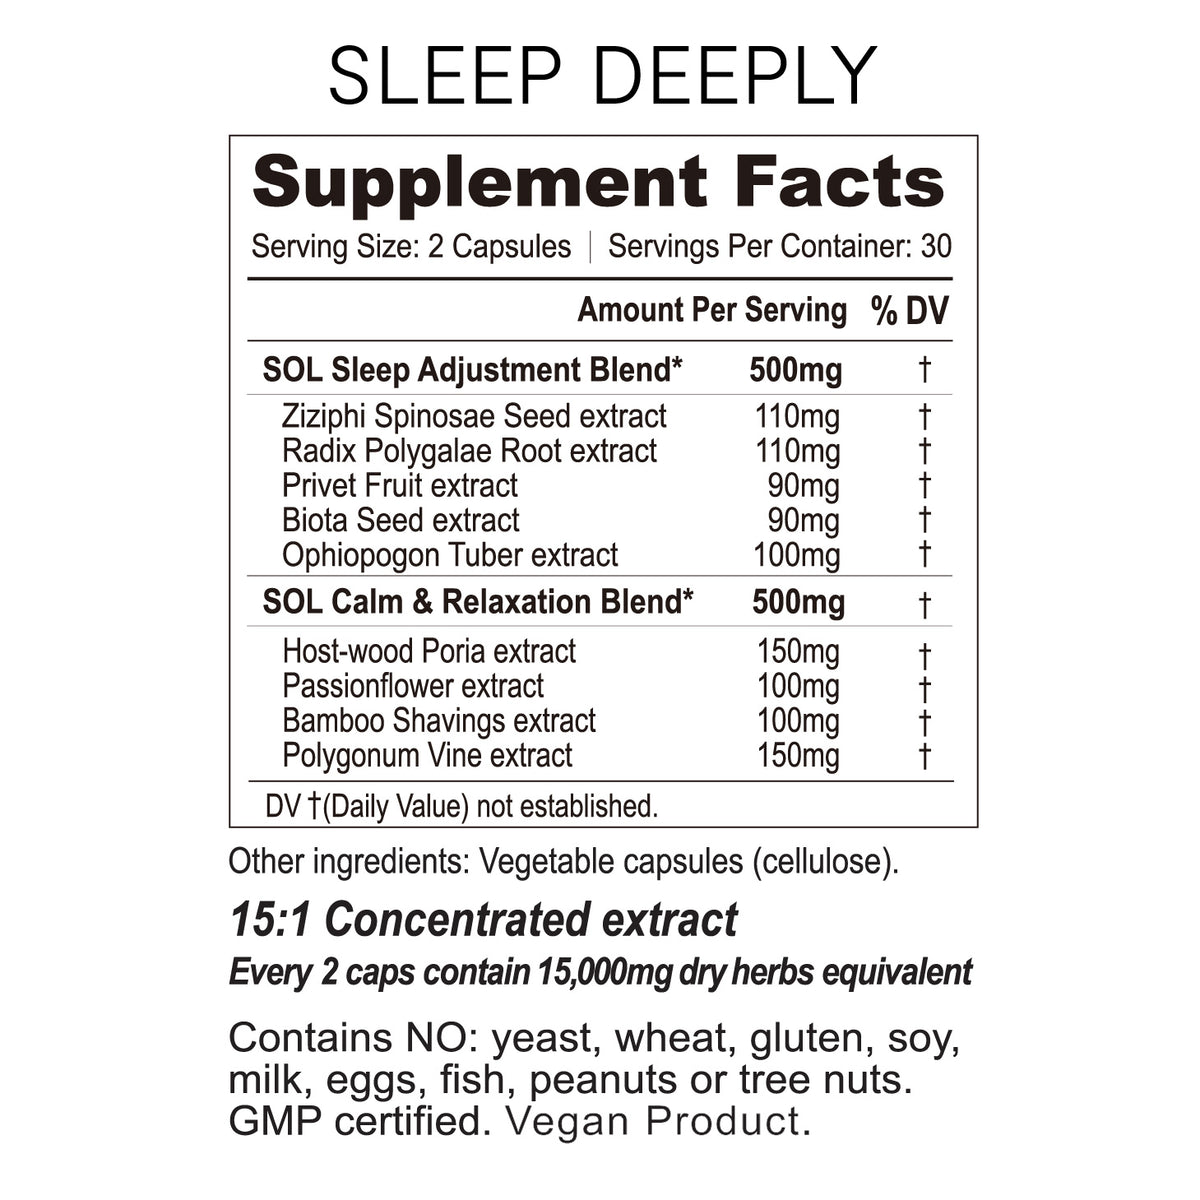 sleep deeply supplement facts